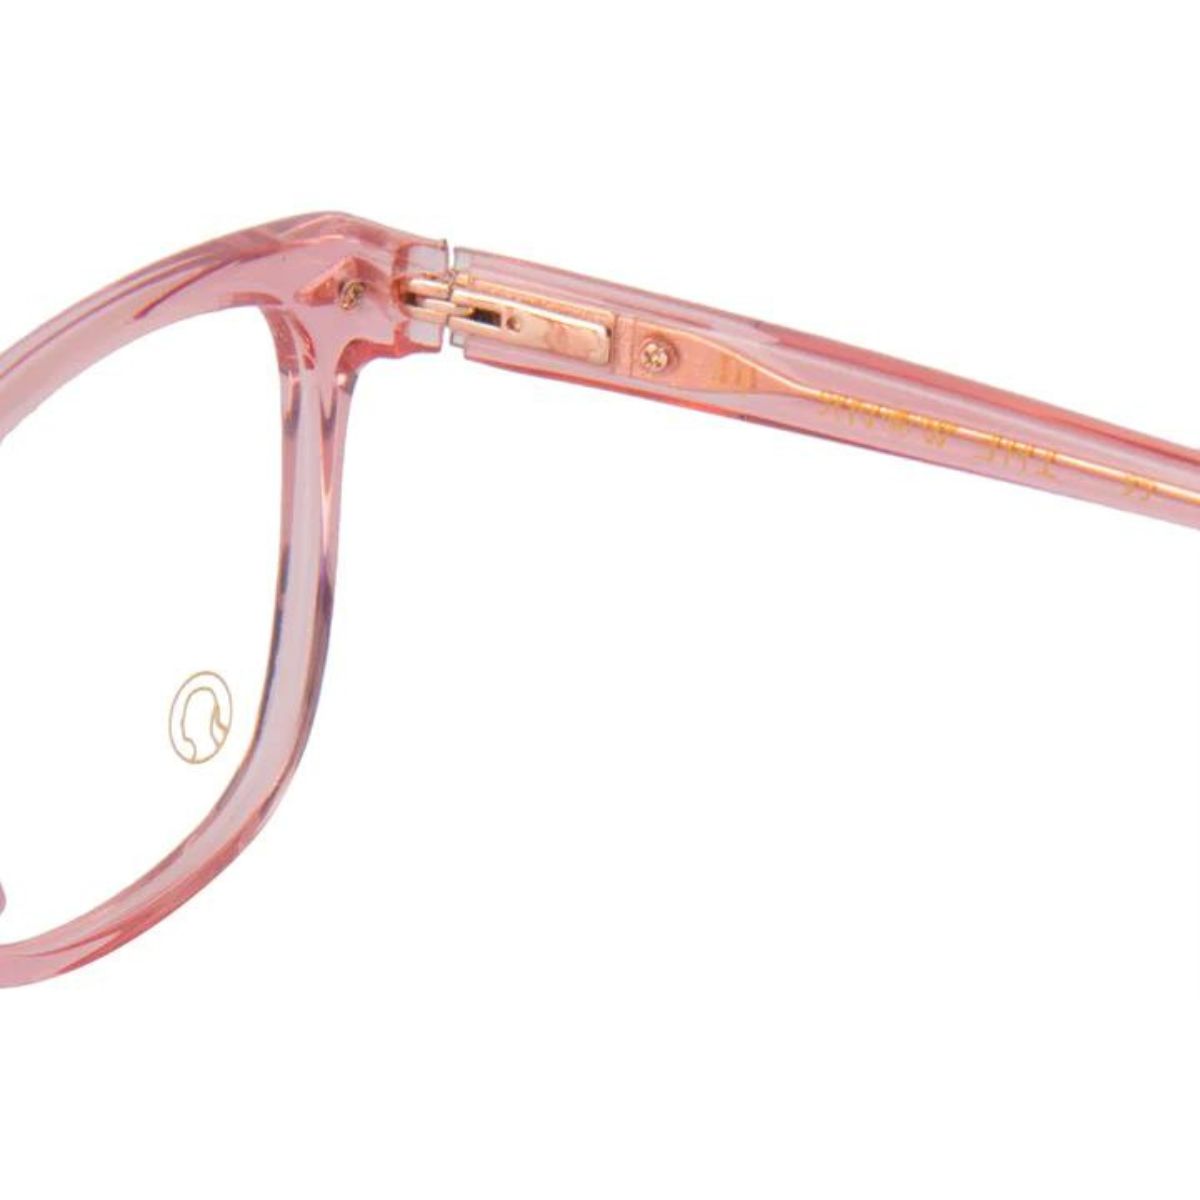 "The Monk Florence C4 eyesight glasses frame for women's at optorium"